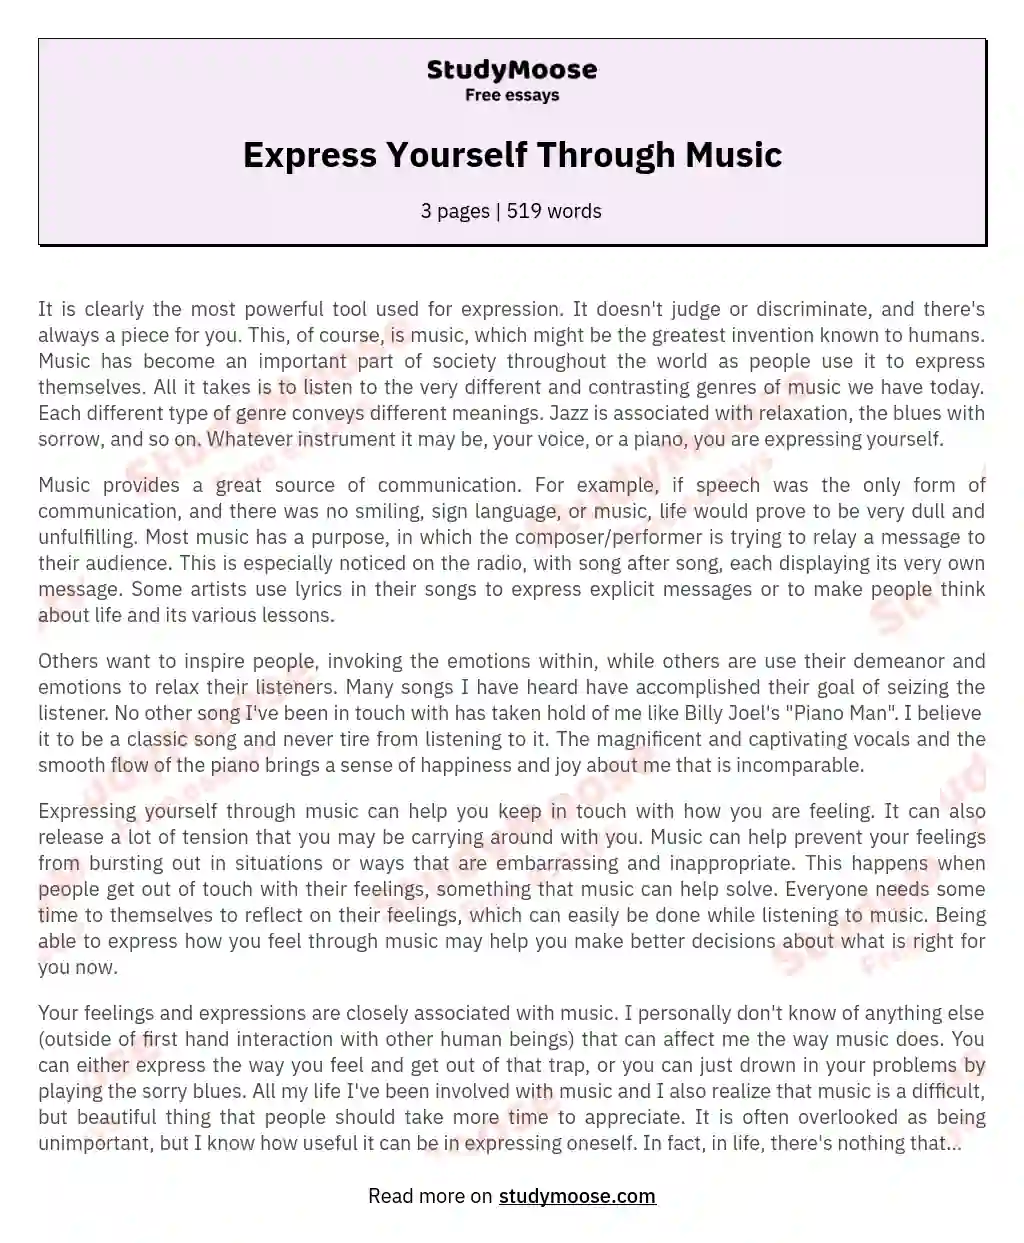 Express Yourself Through Music essay